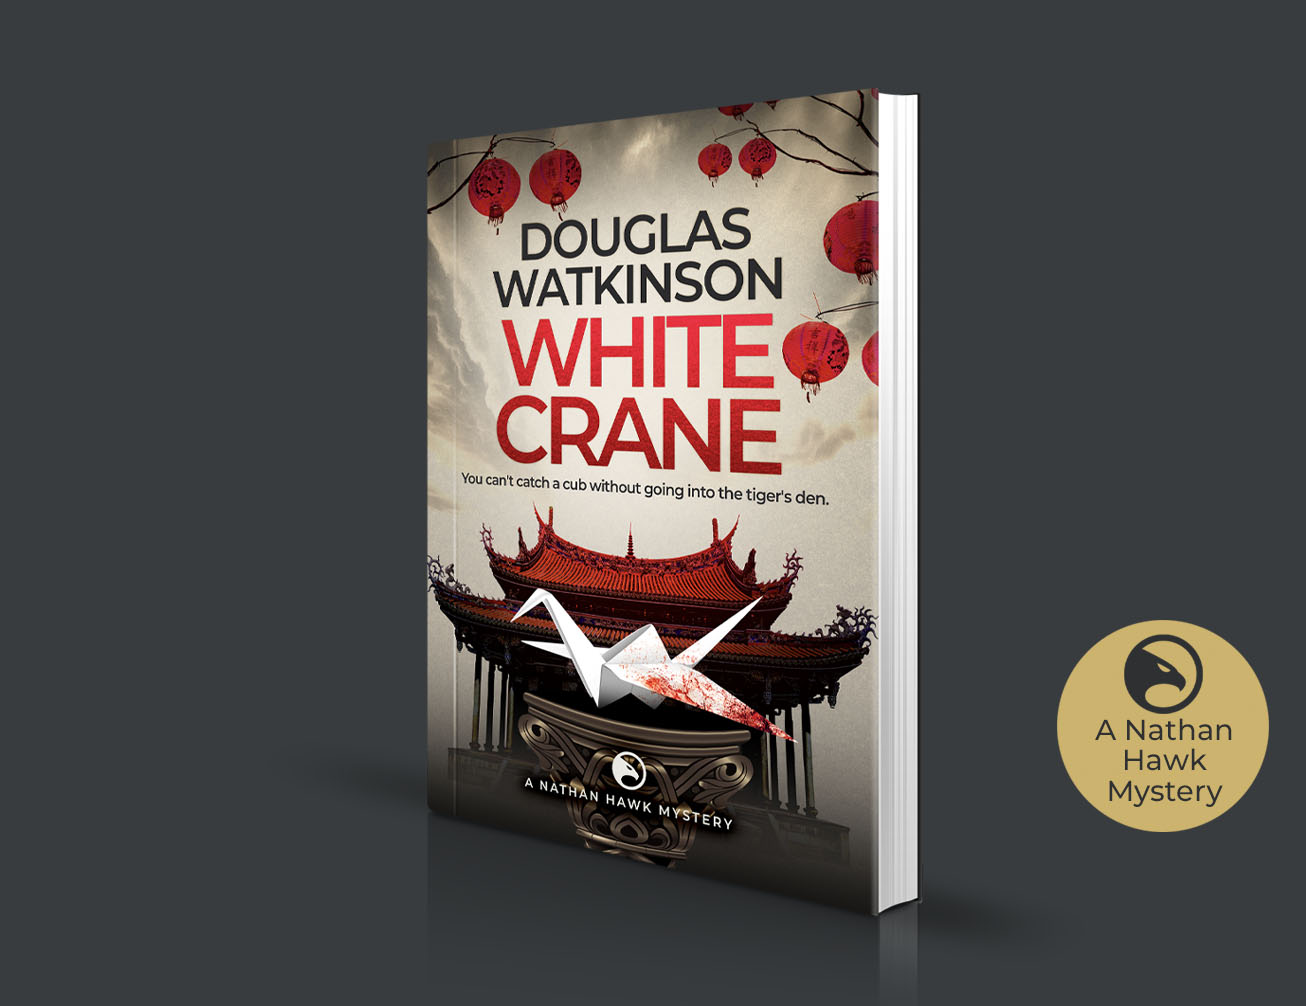 White Crane book by author Douglas Watkinson